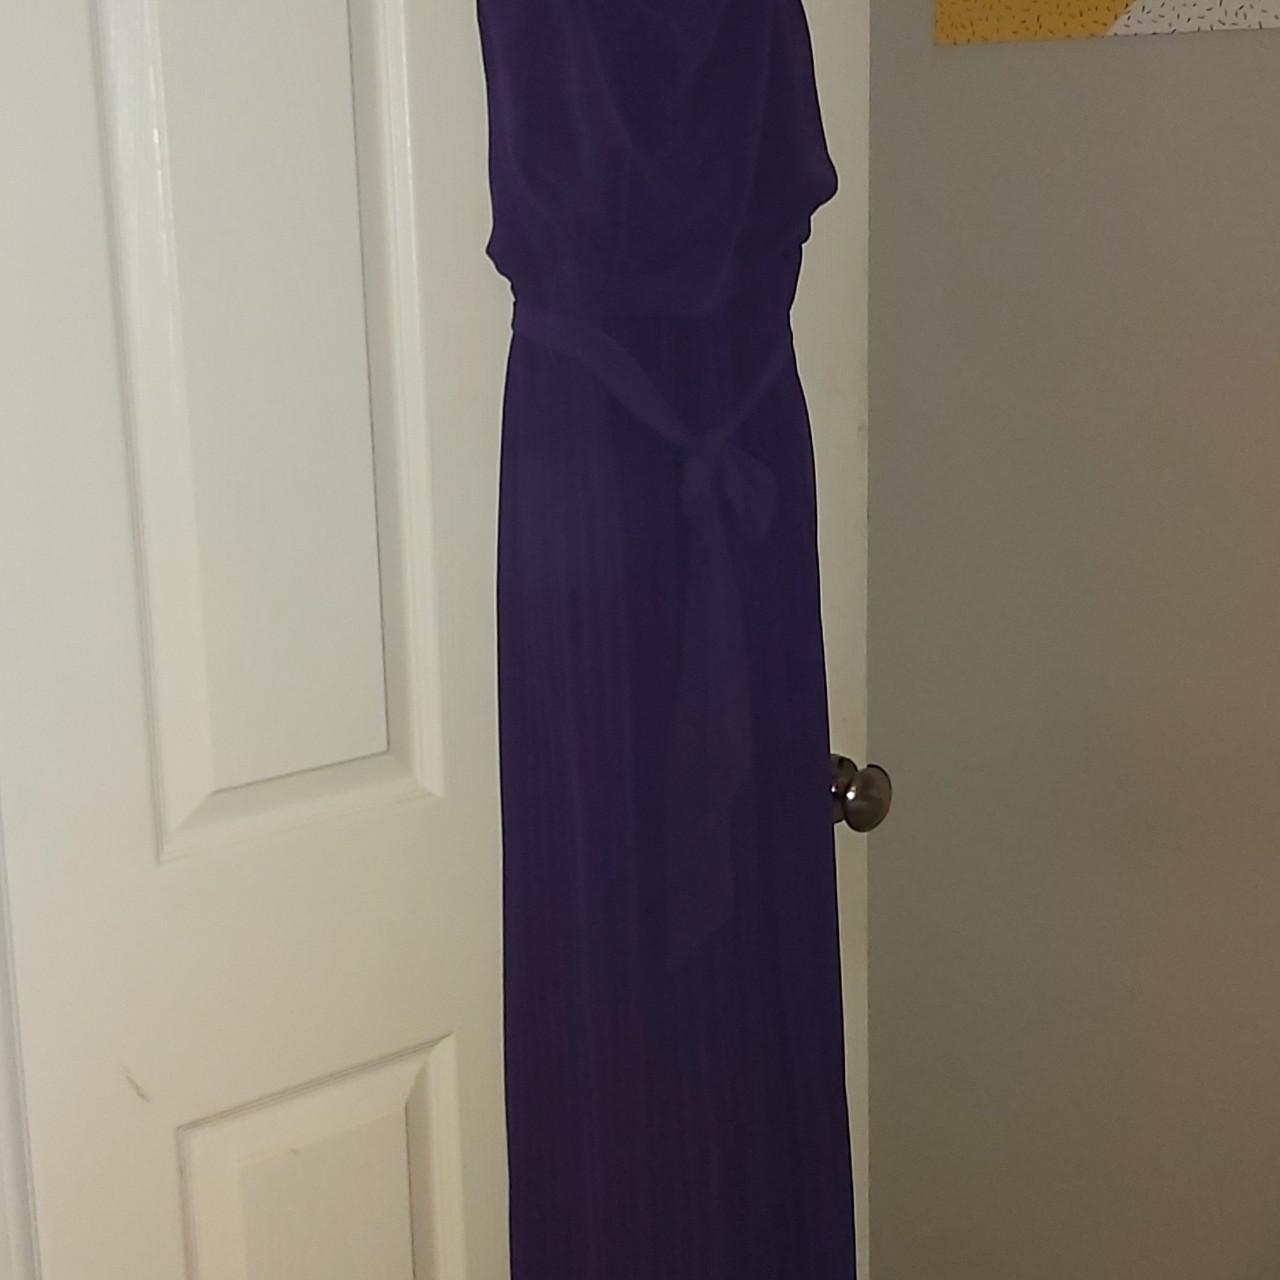 Next occasionwear dress in purple #prom #bridesmaid - Depop